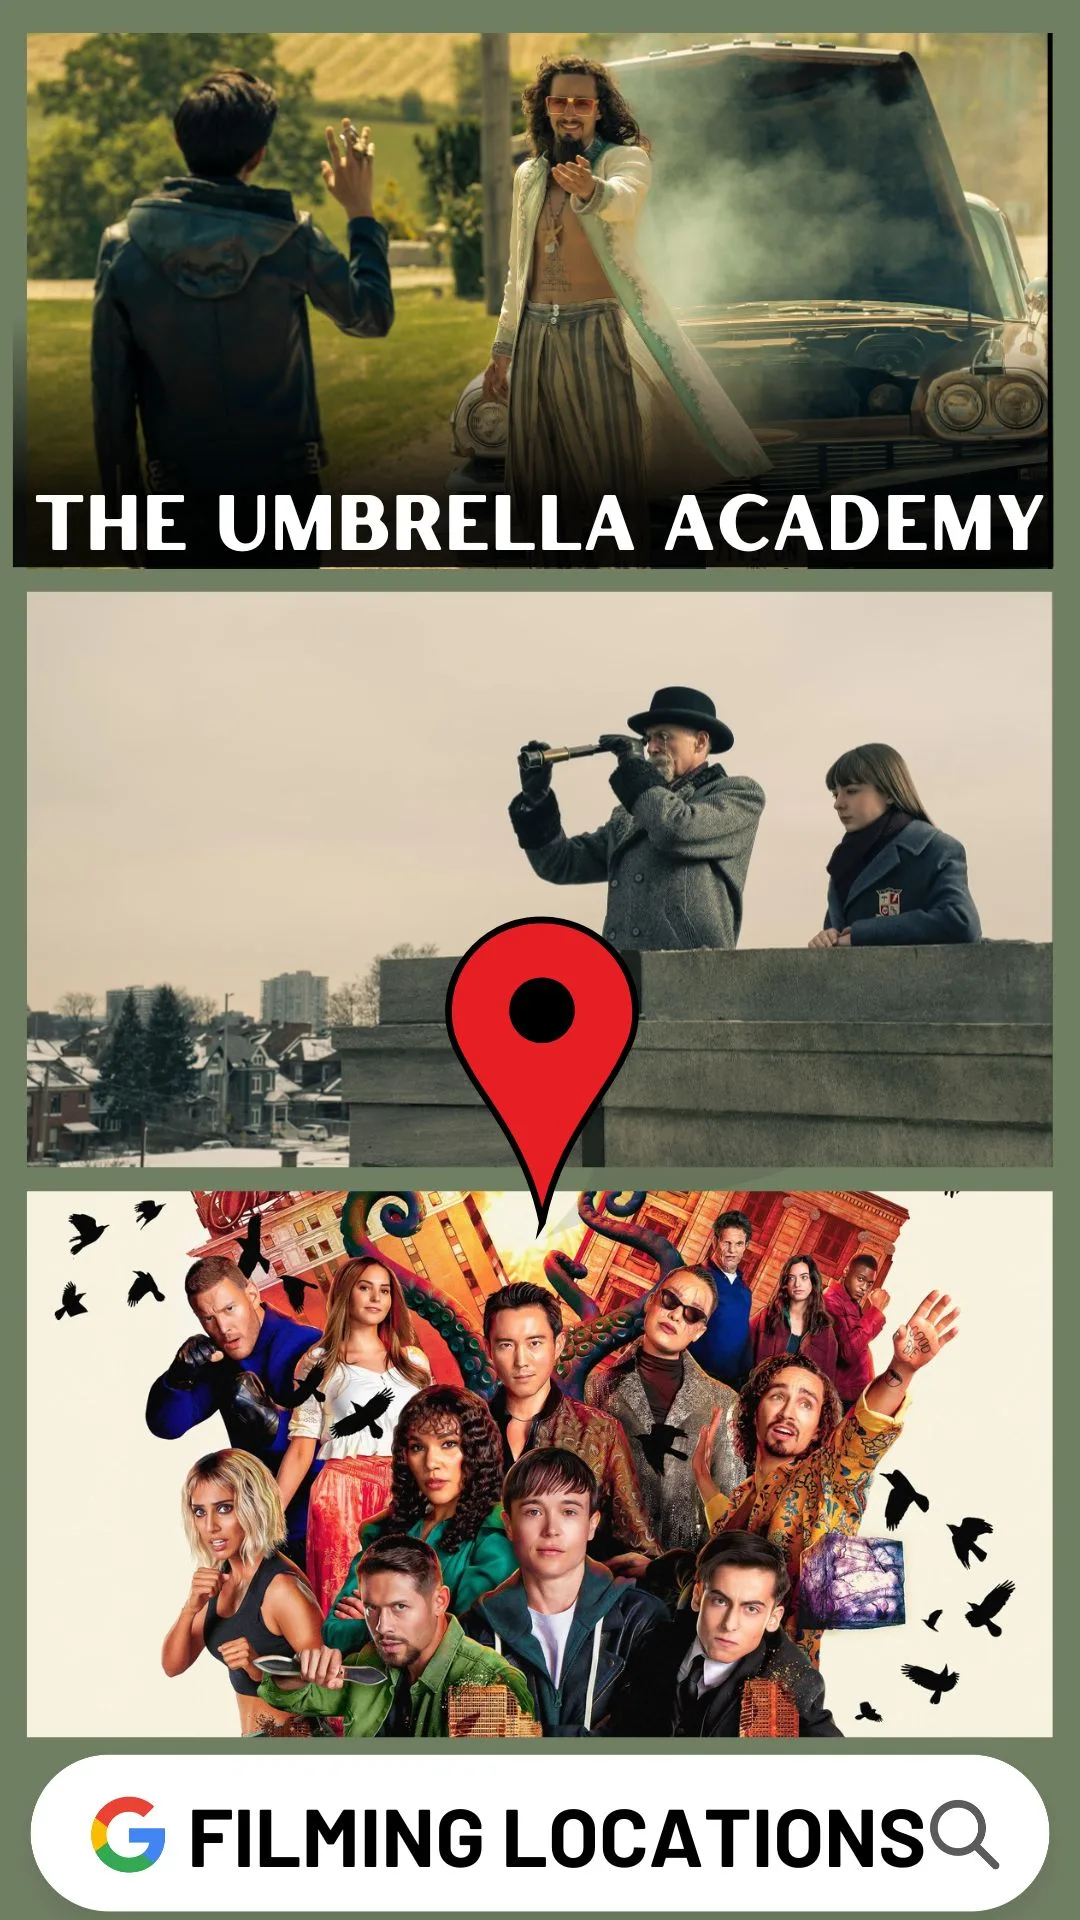 The Umbrella Academy Filming Locations